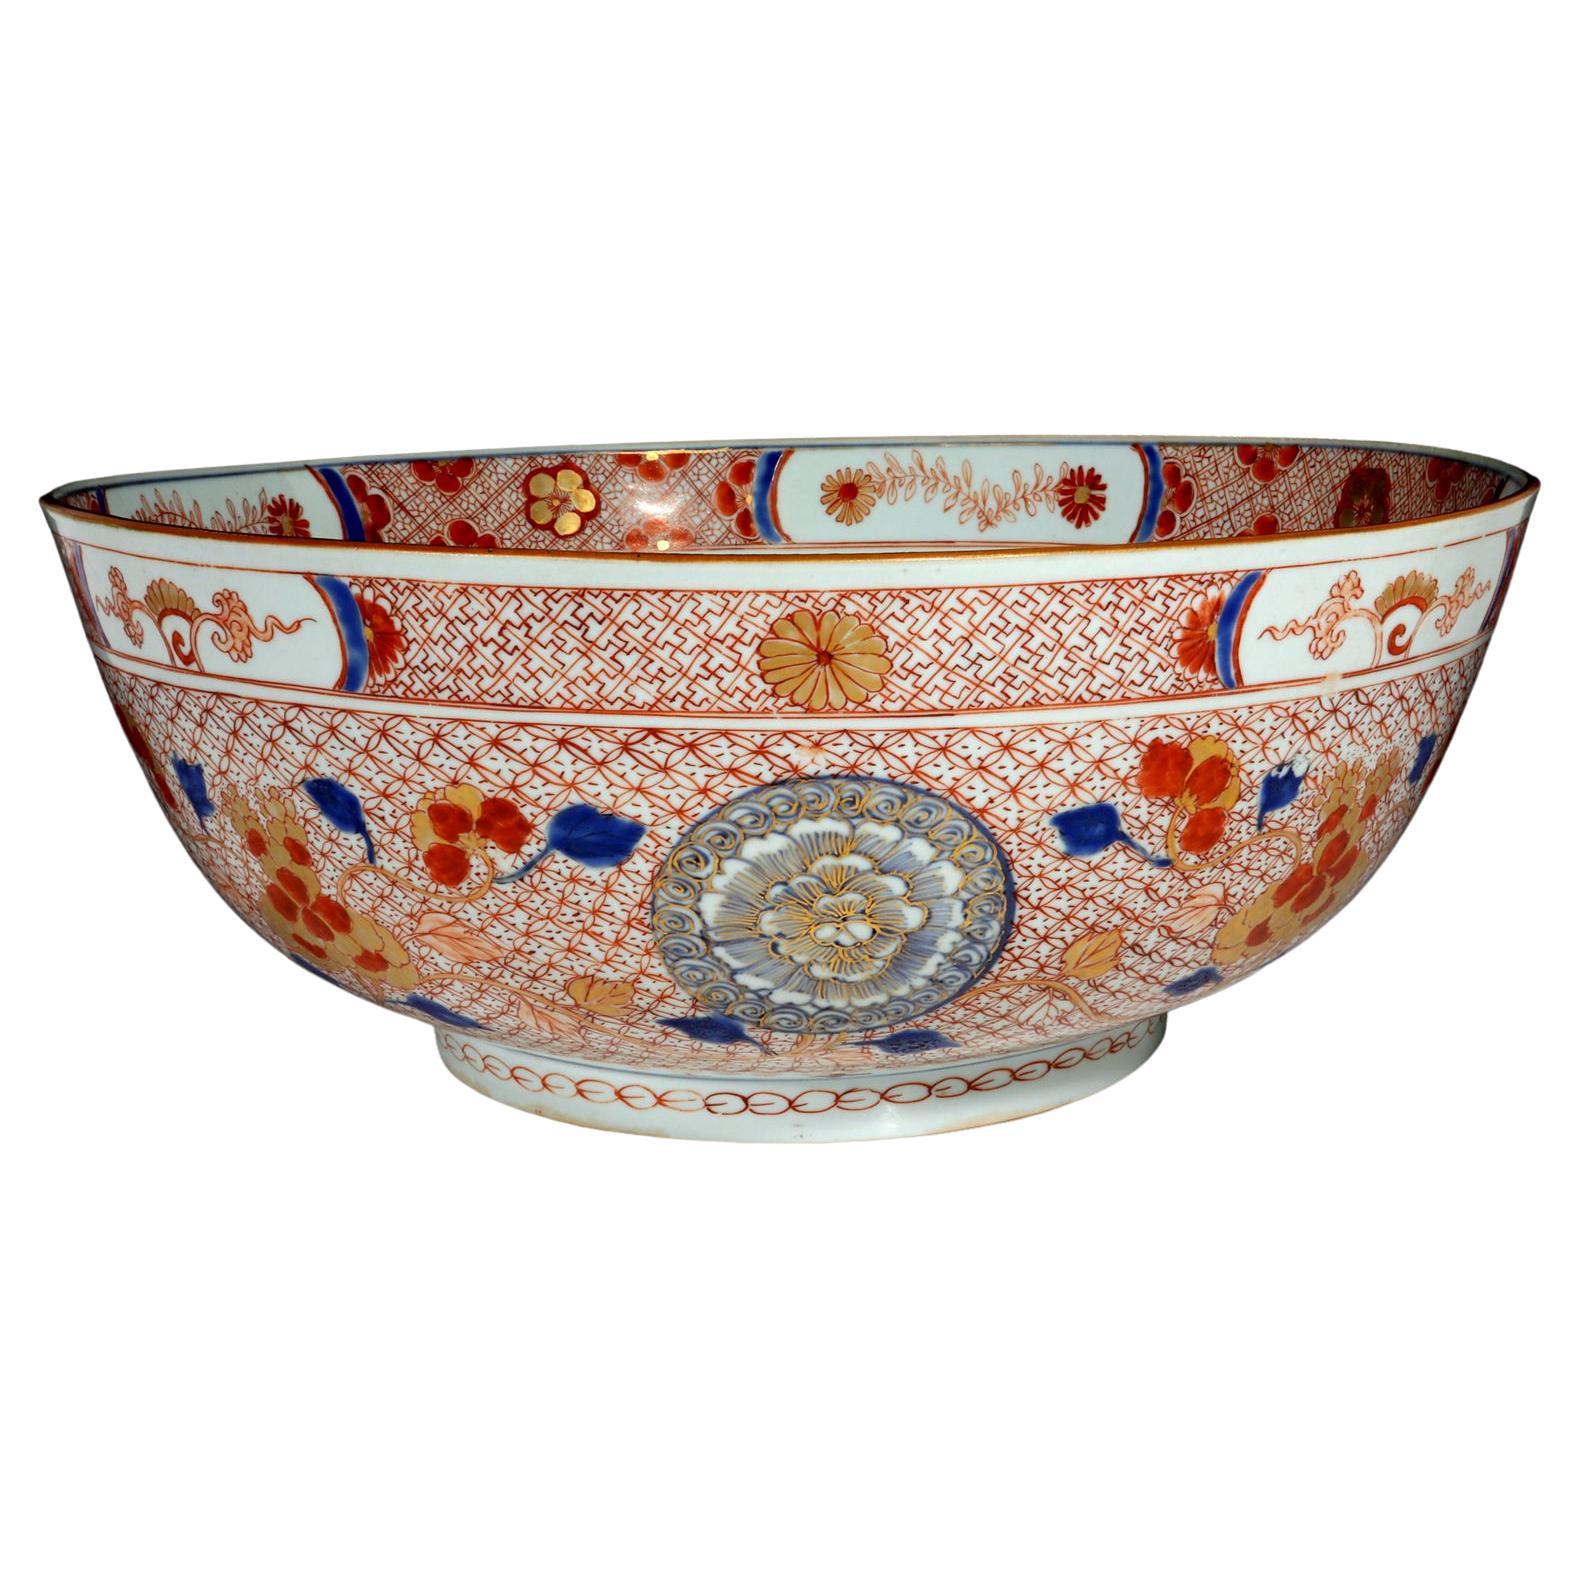 Chinese Export Porcelain Imari & Rouge de Fer Large Punch Bowl